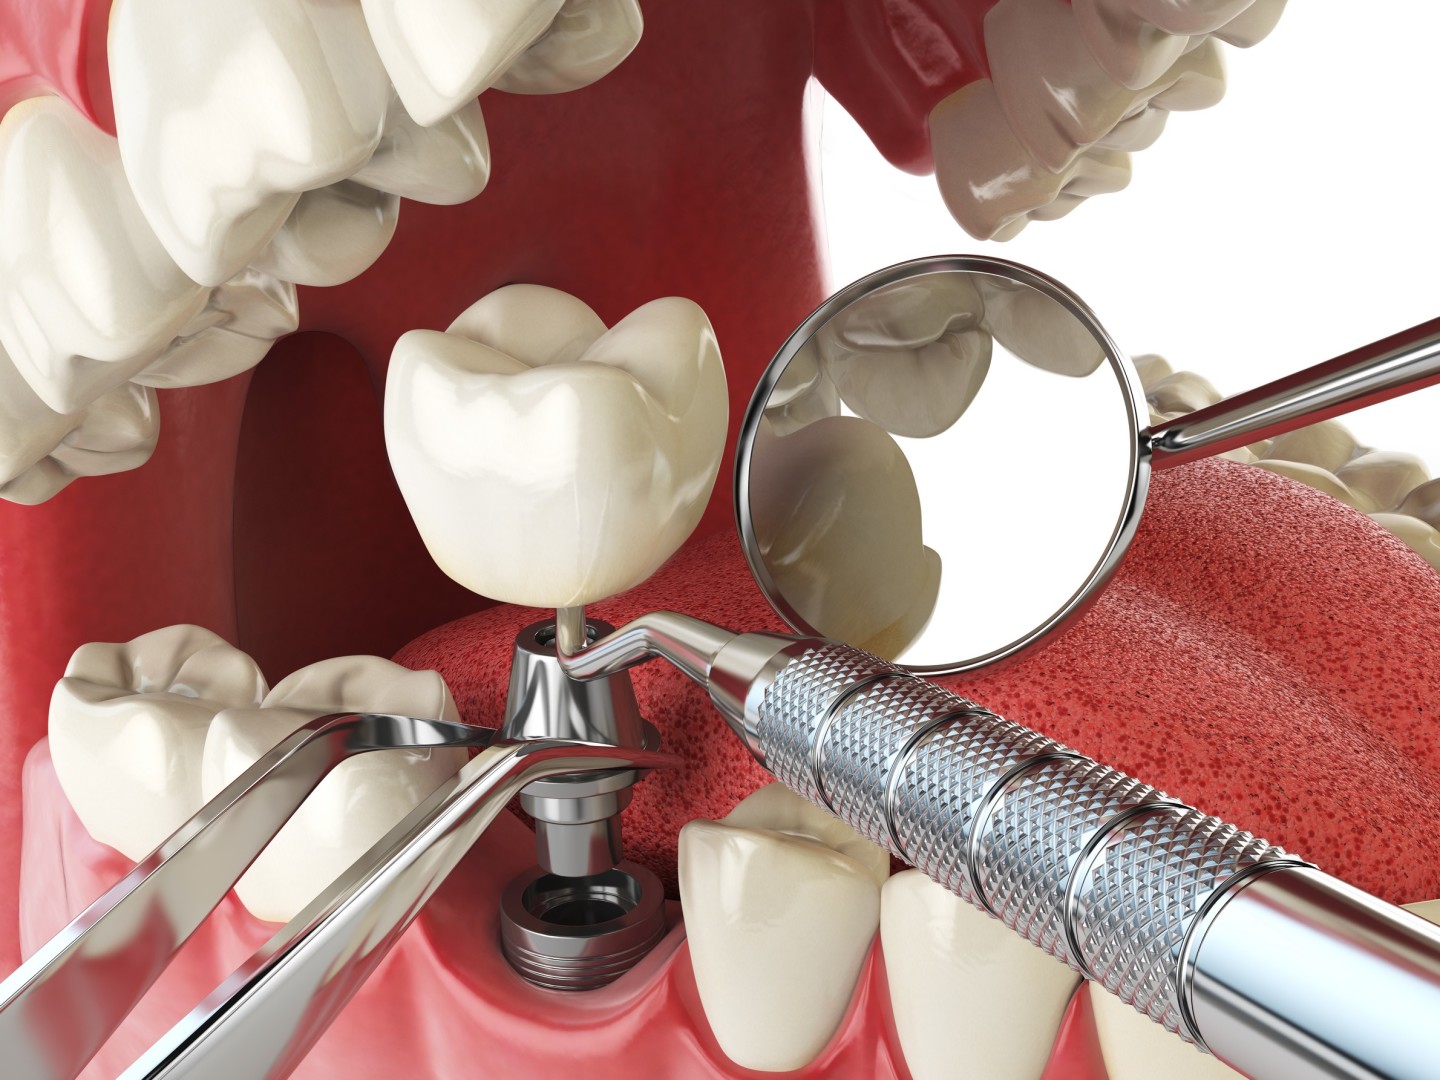 Implantologie dentaire